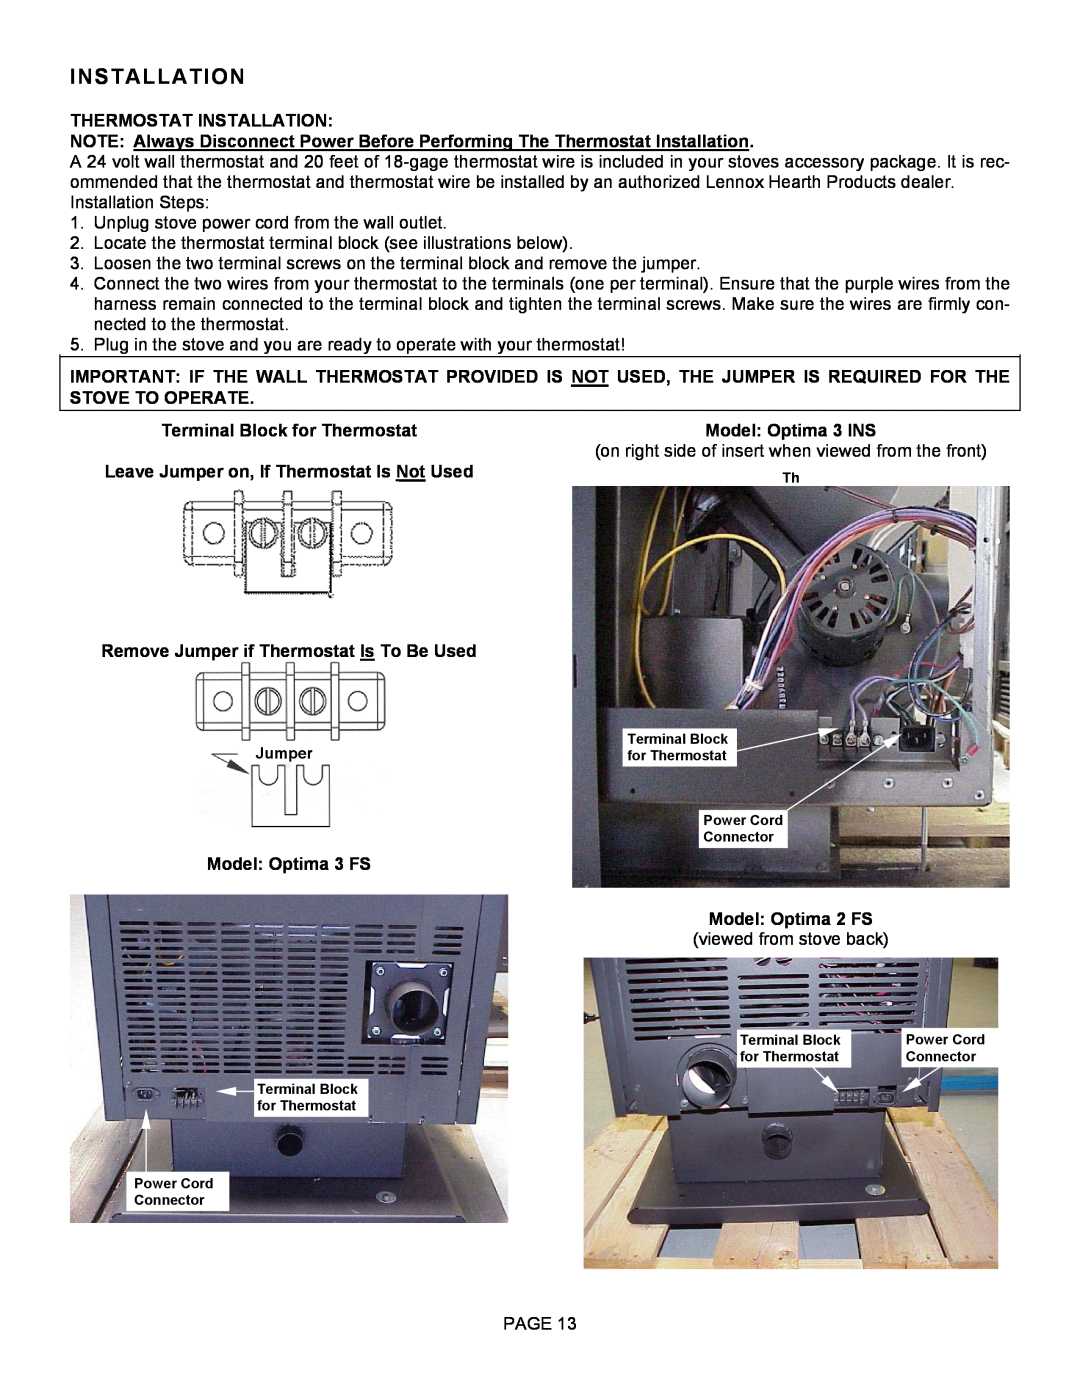 Lenoxx Electronics Thermostat Installation, Terminal Block for Thermostat, Model Optima 3 FS, Model: Optima 3 INS 